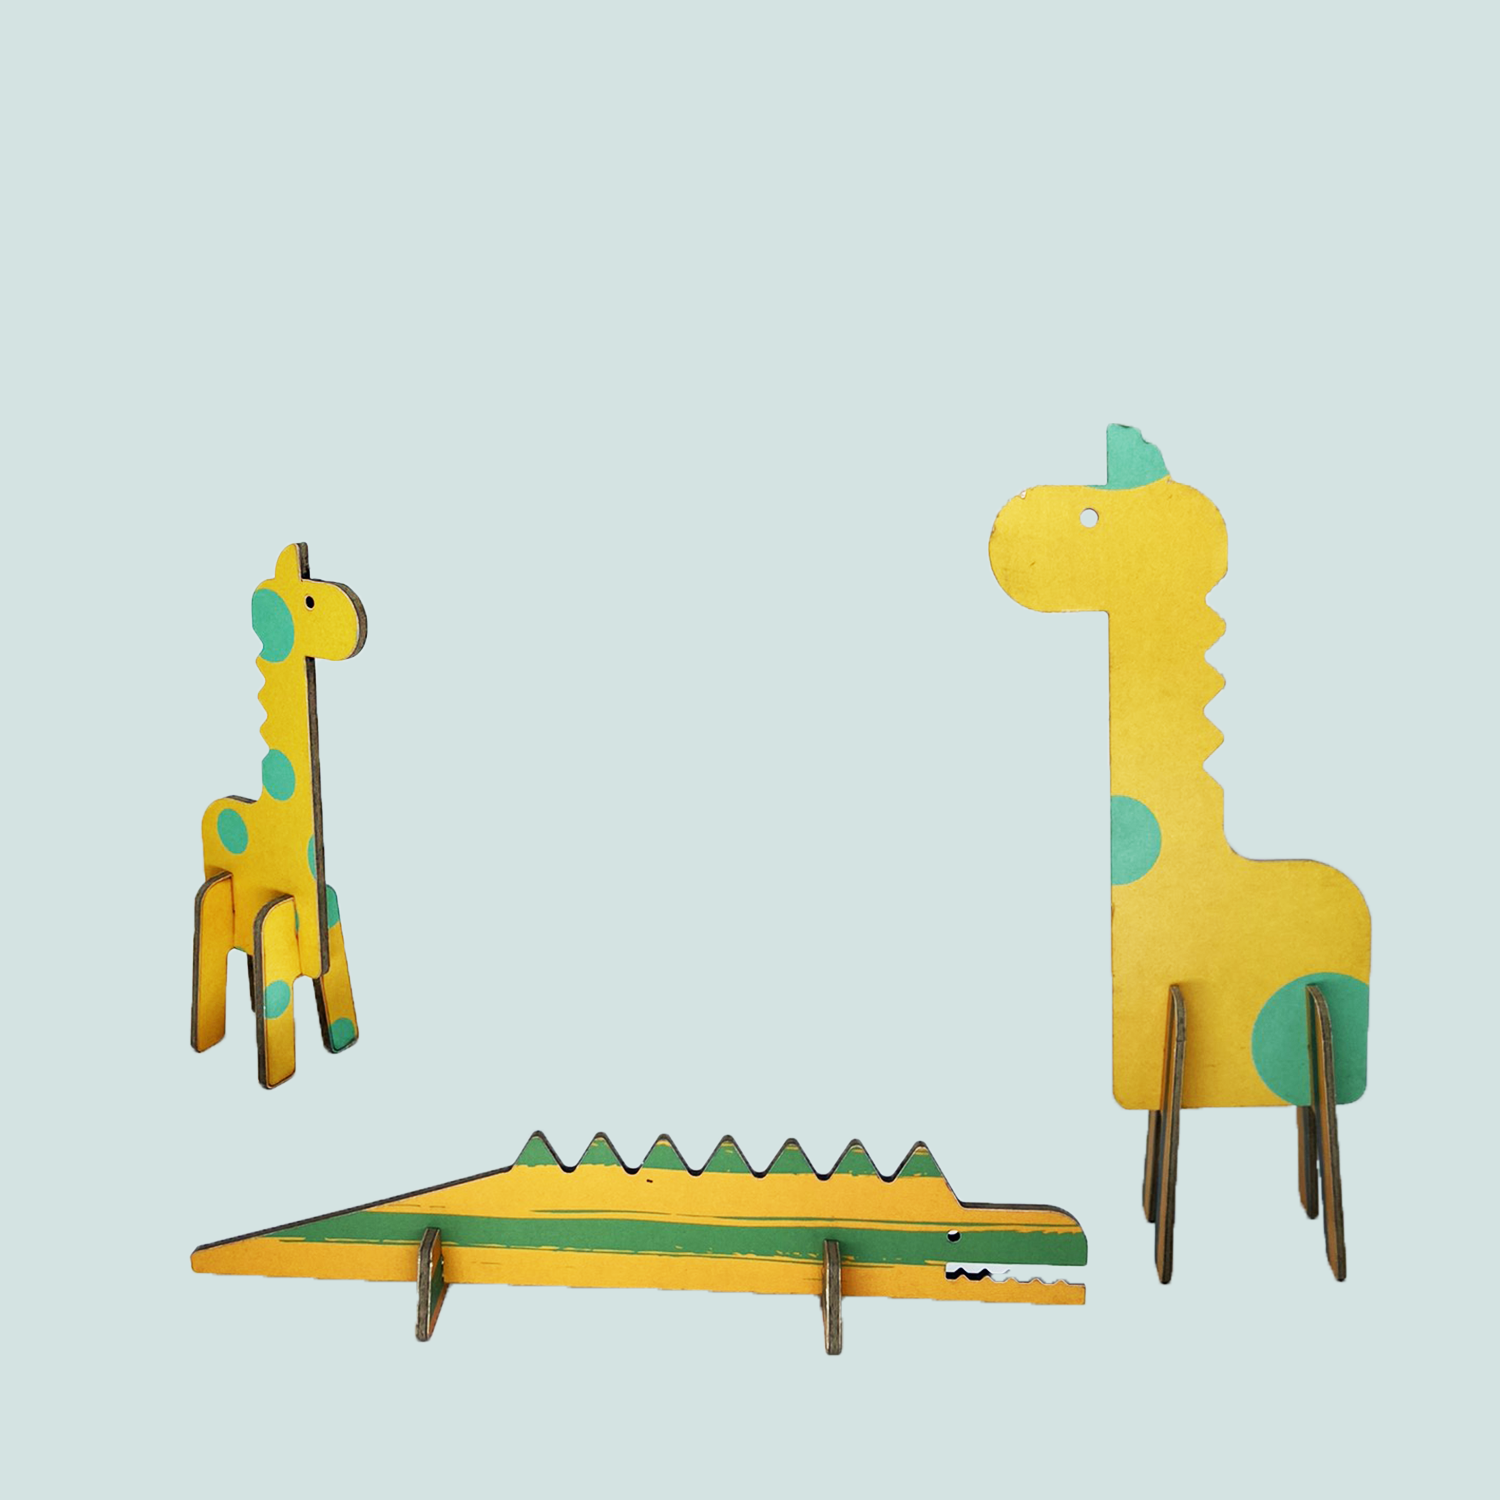 Big and small giraffe and crocodile